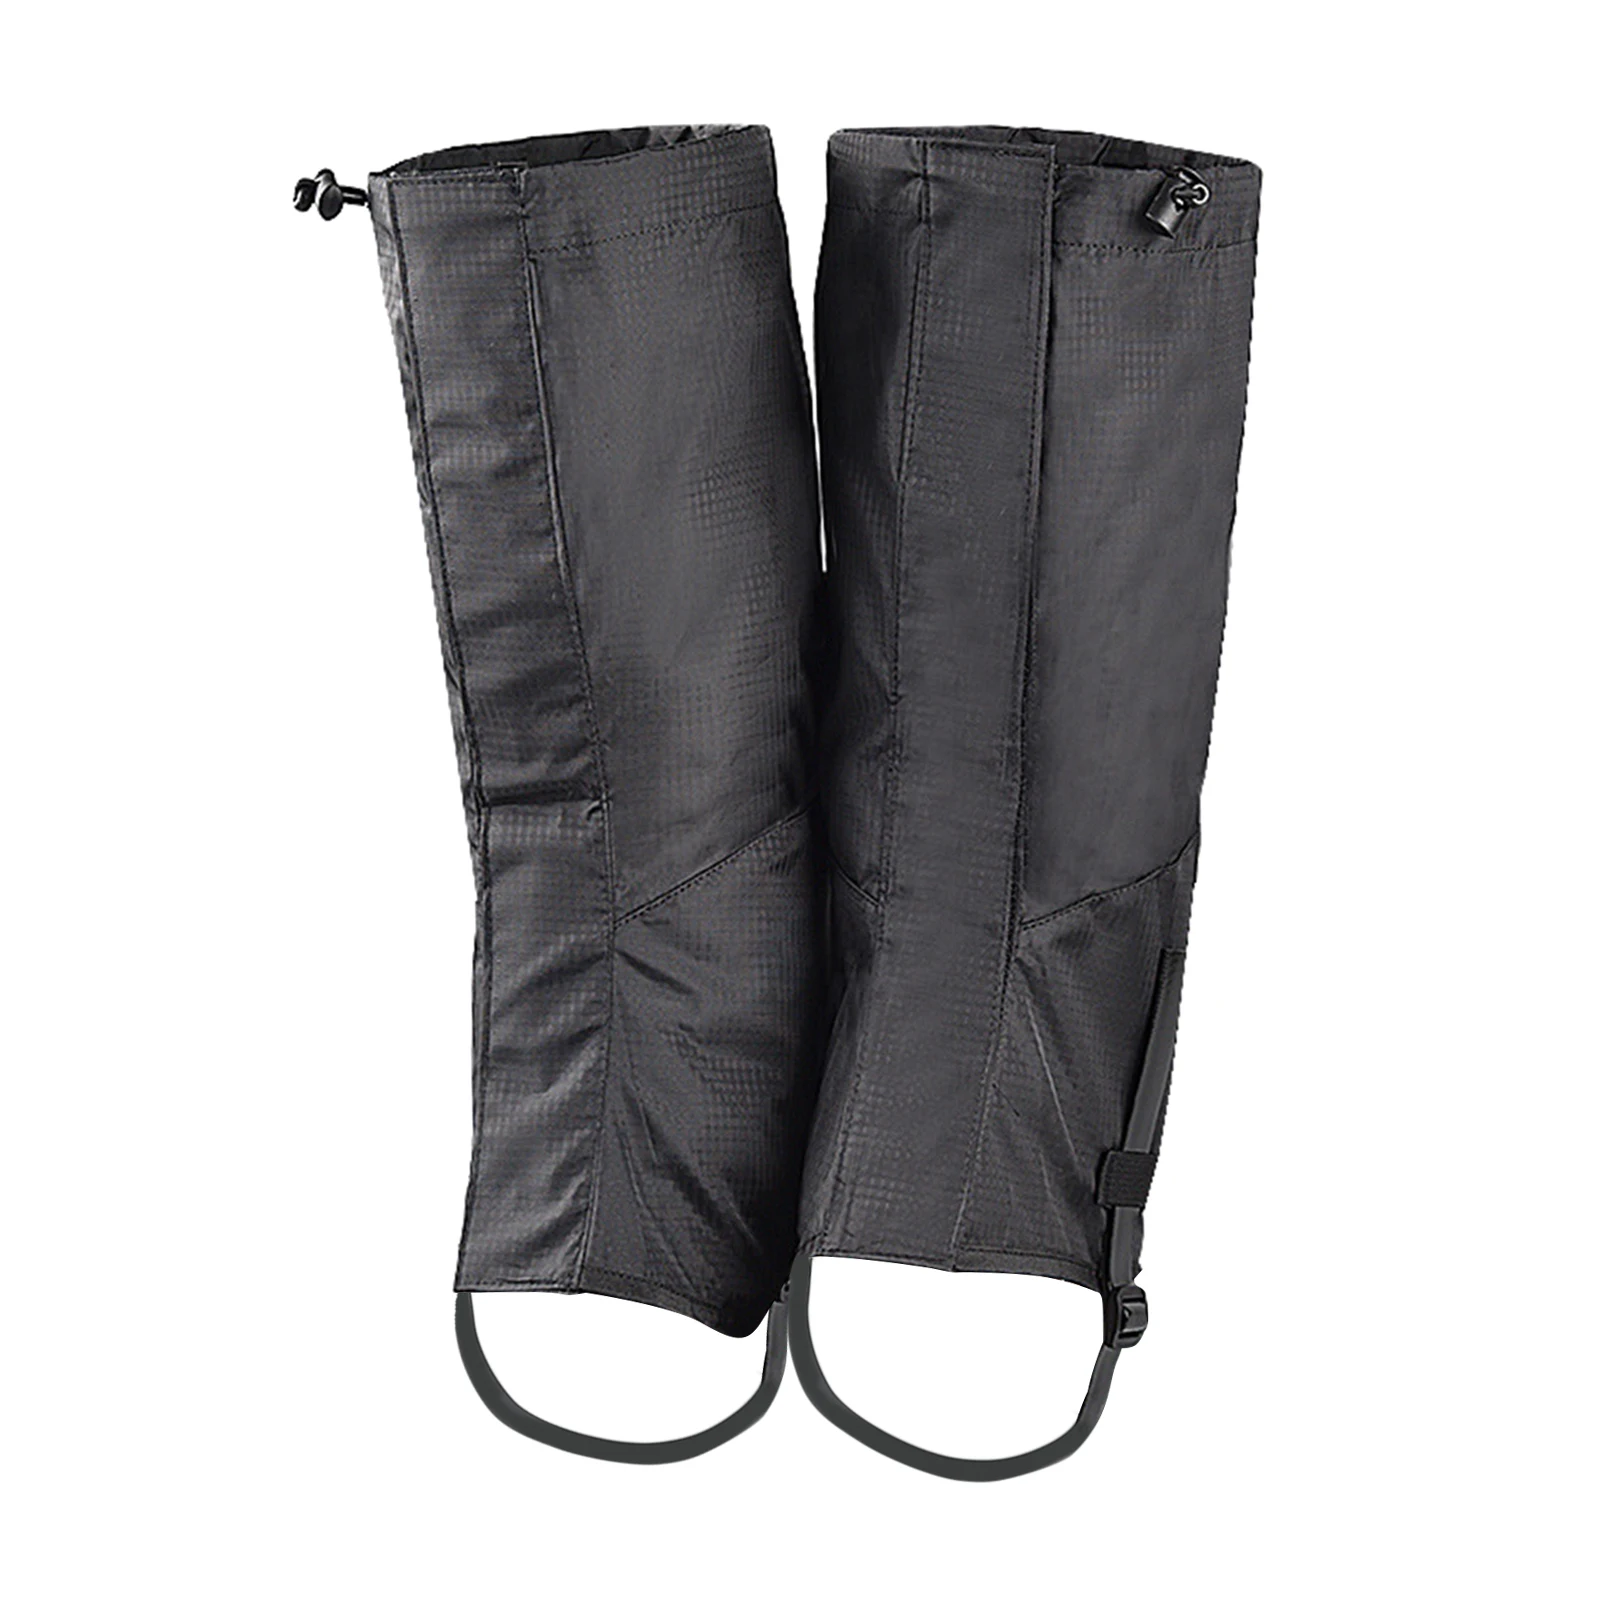 Leg Gaiters Adjustable Anti-Tear Rainproof Oxford Fabric Cover for Mountaineering Walking Hiking Men Women